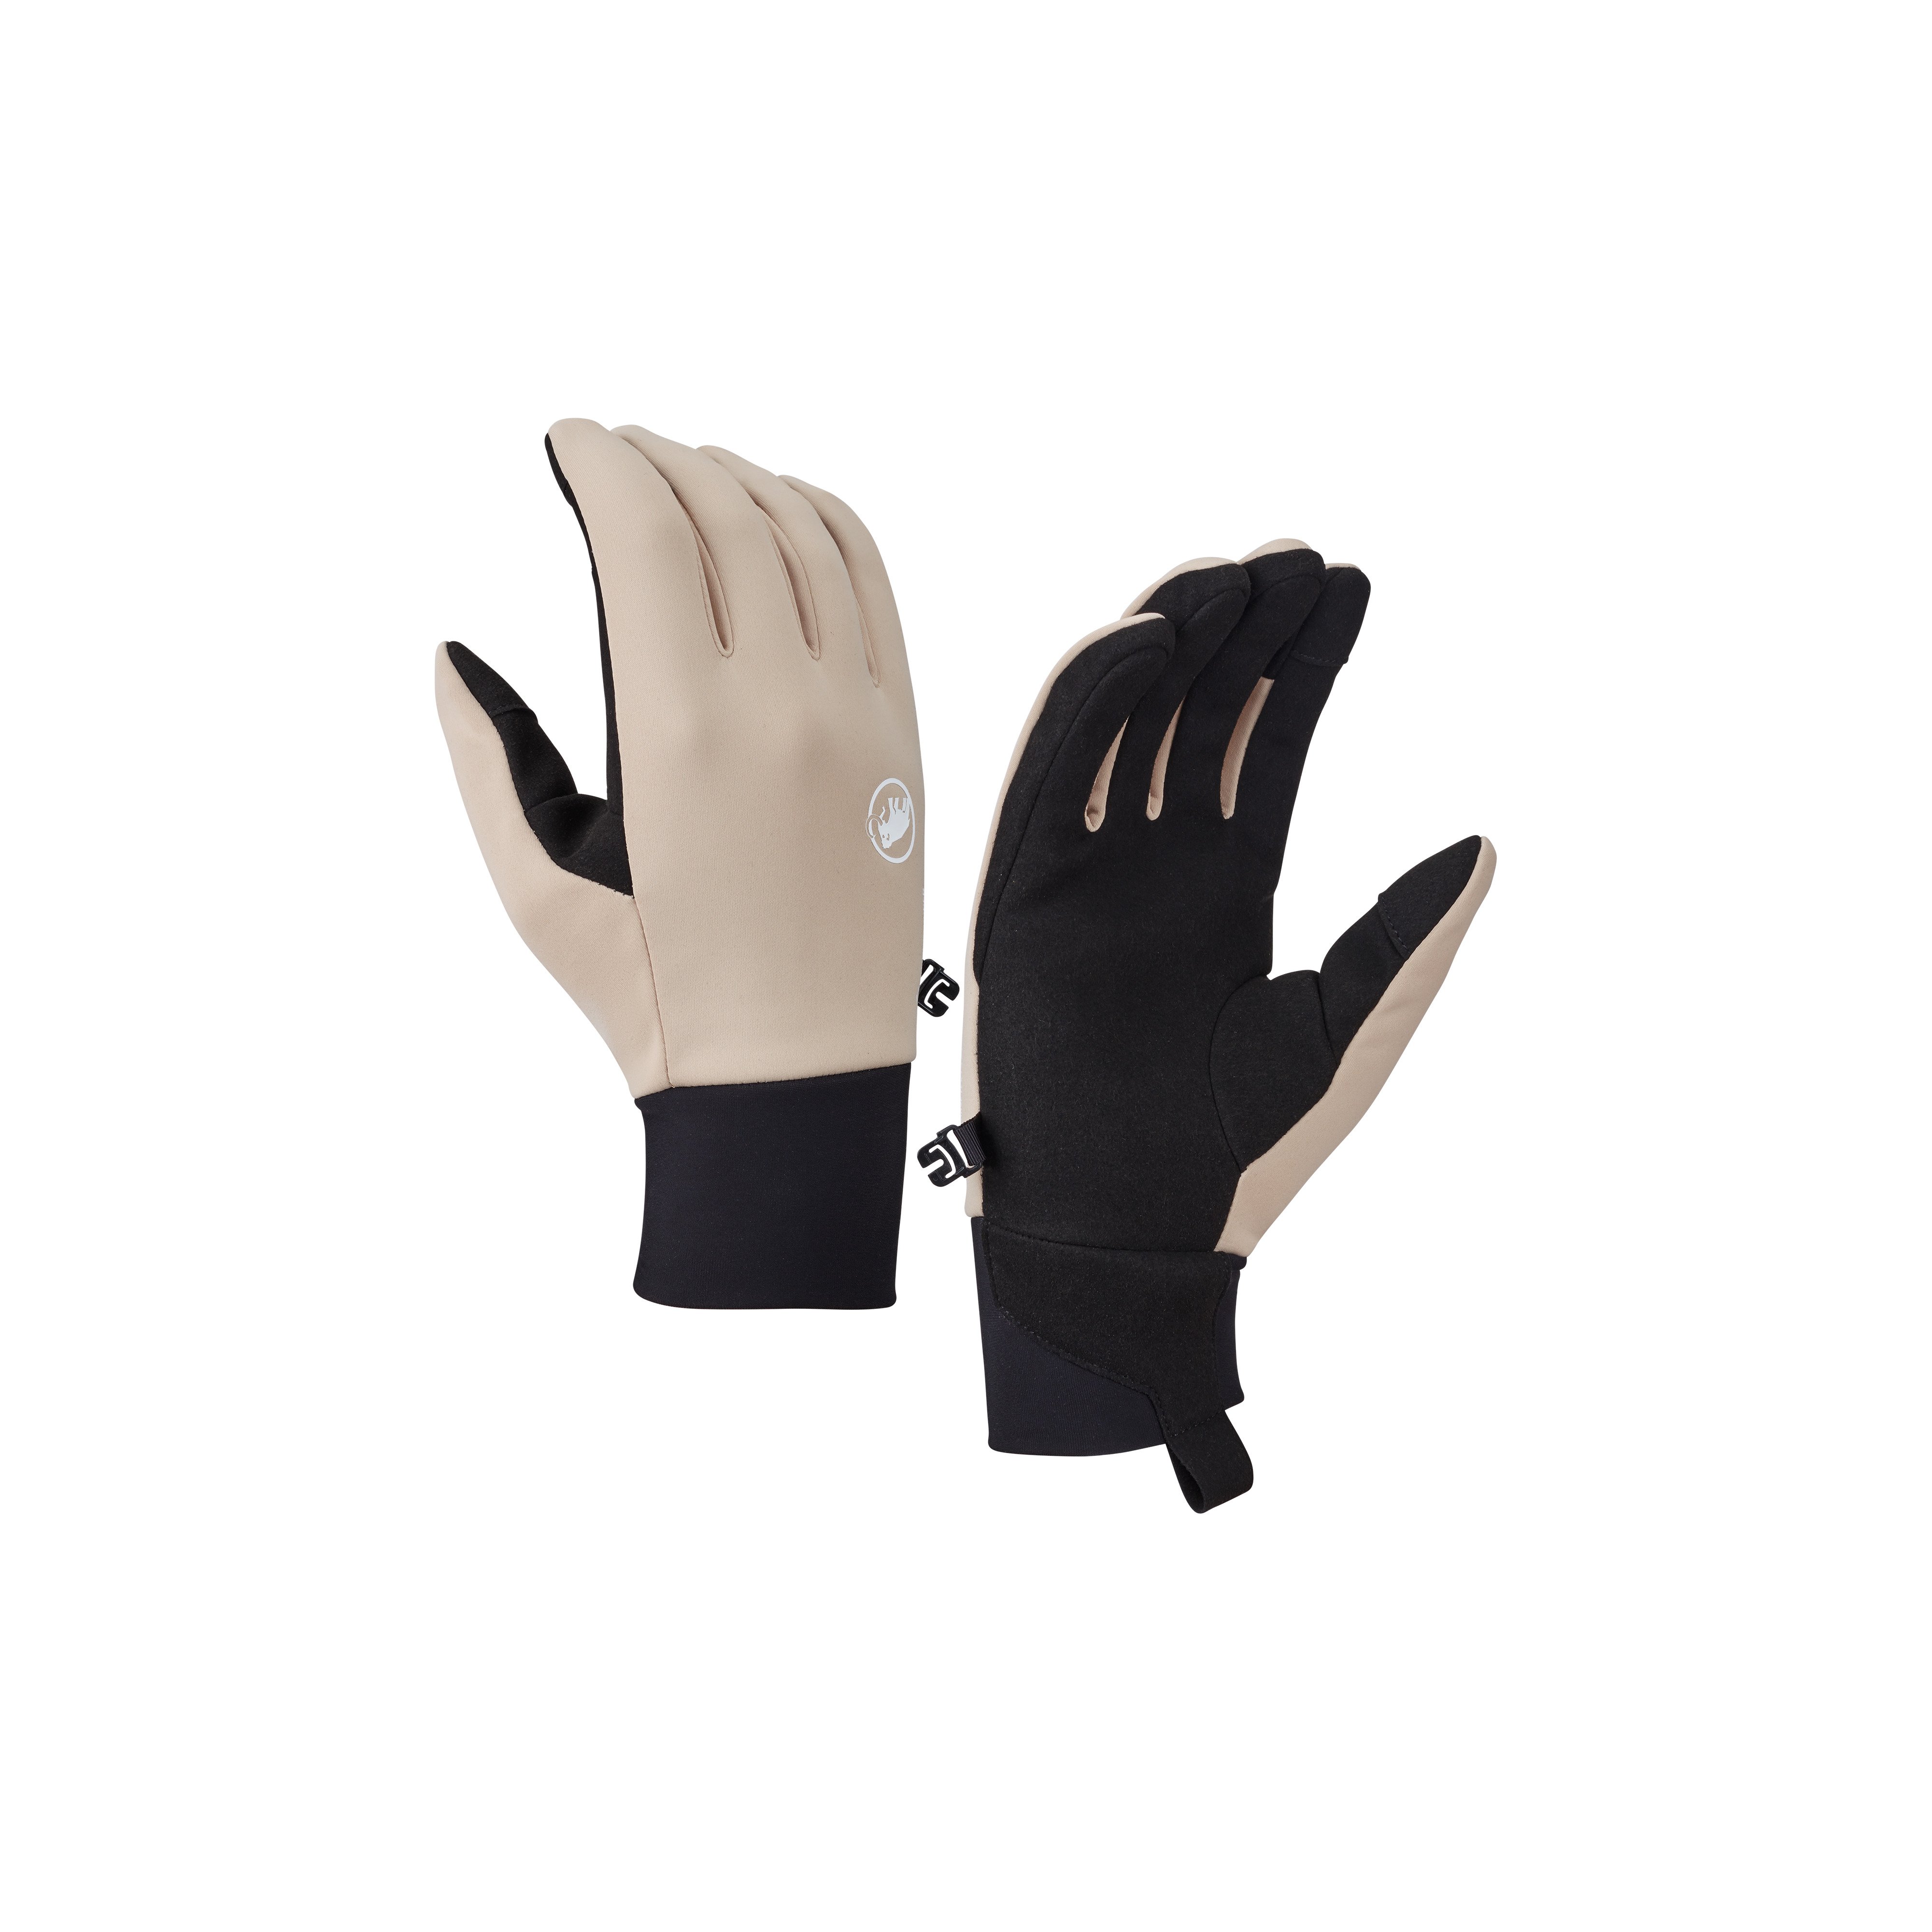 Astro Glove - savannah-black, 6 thumbnail